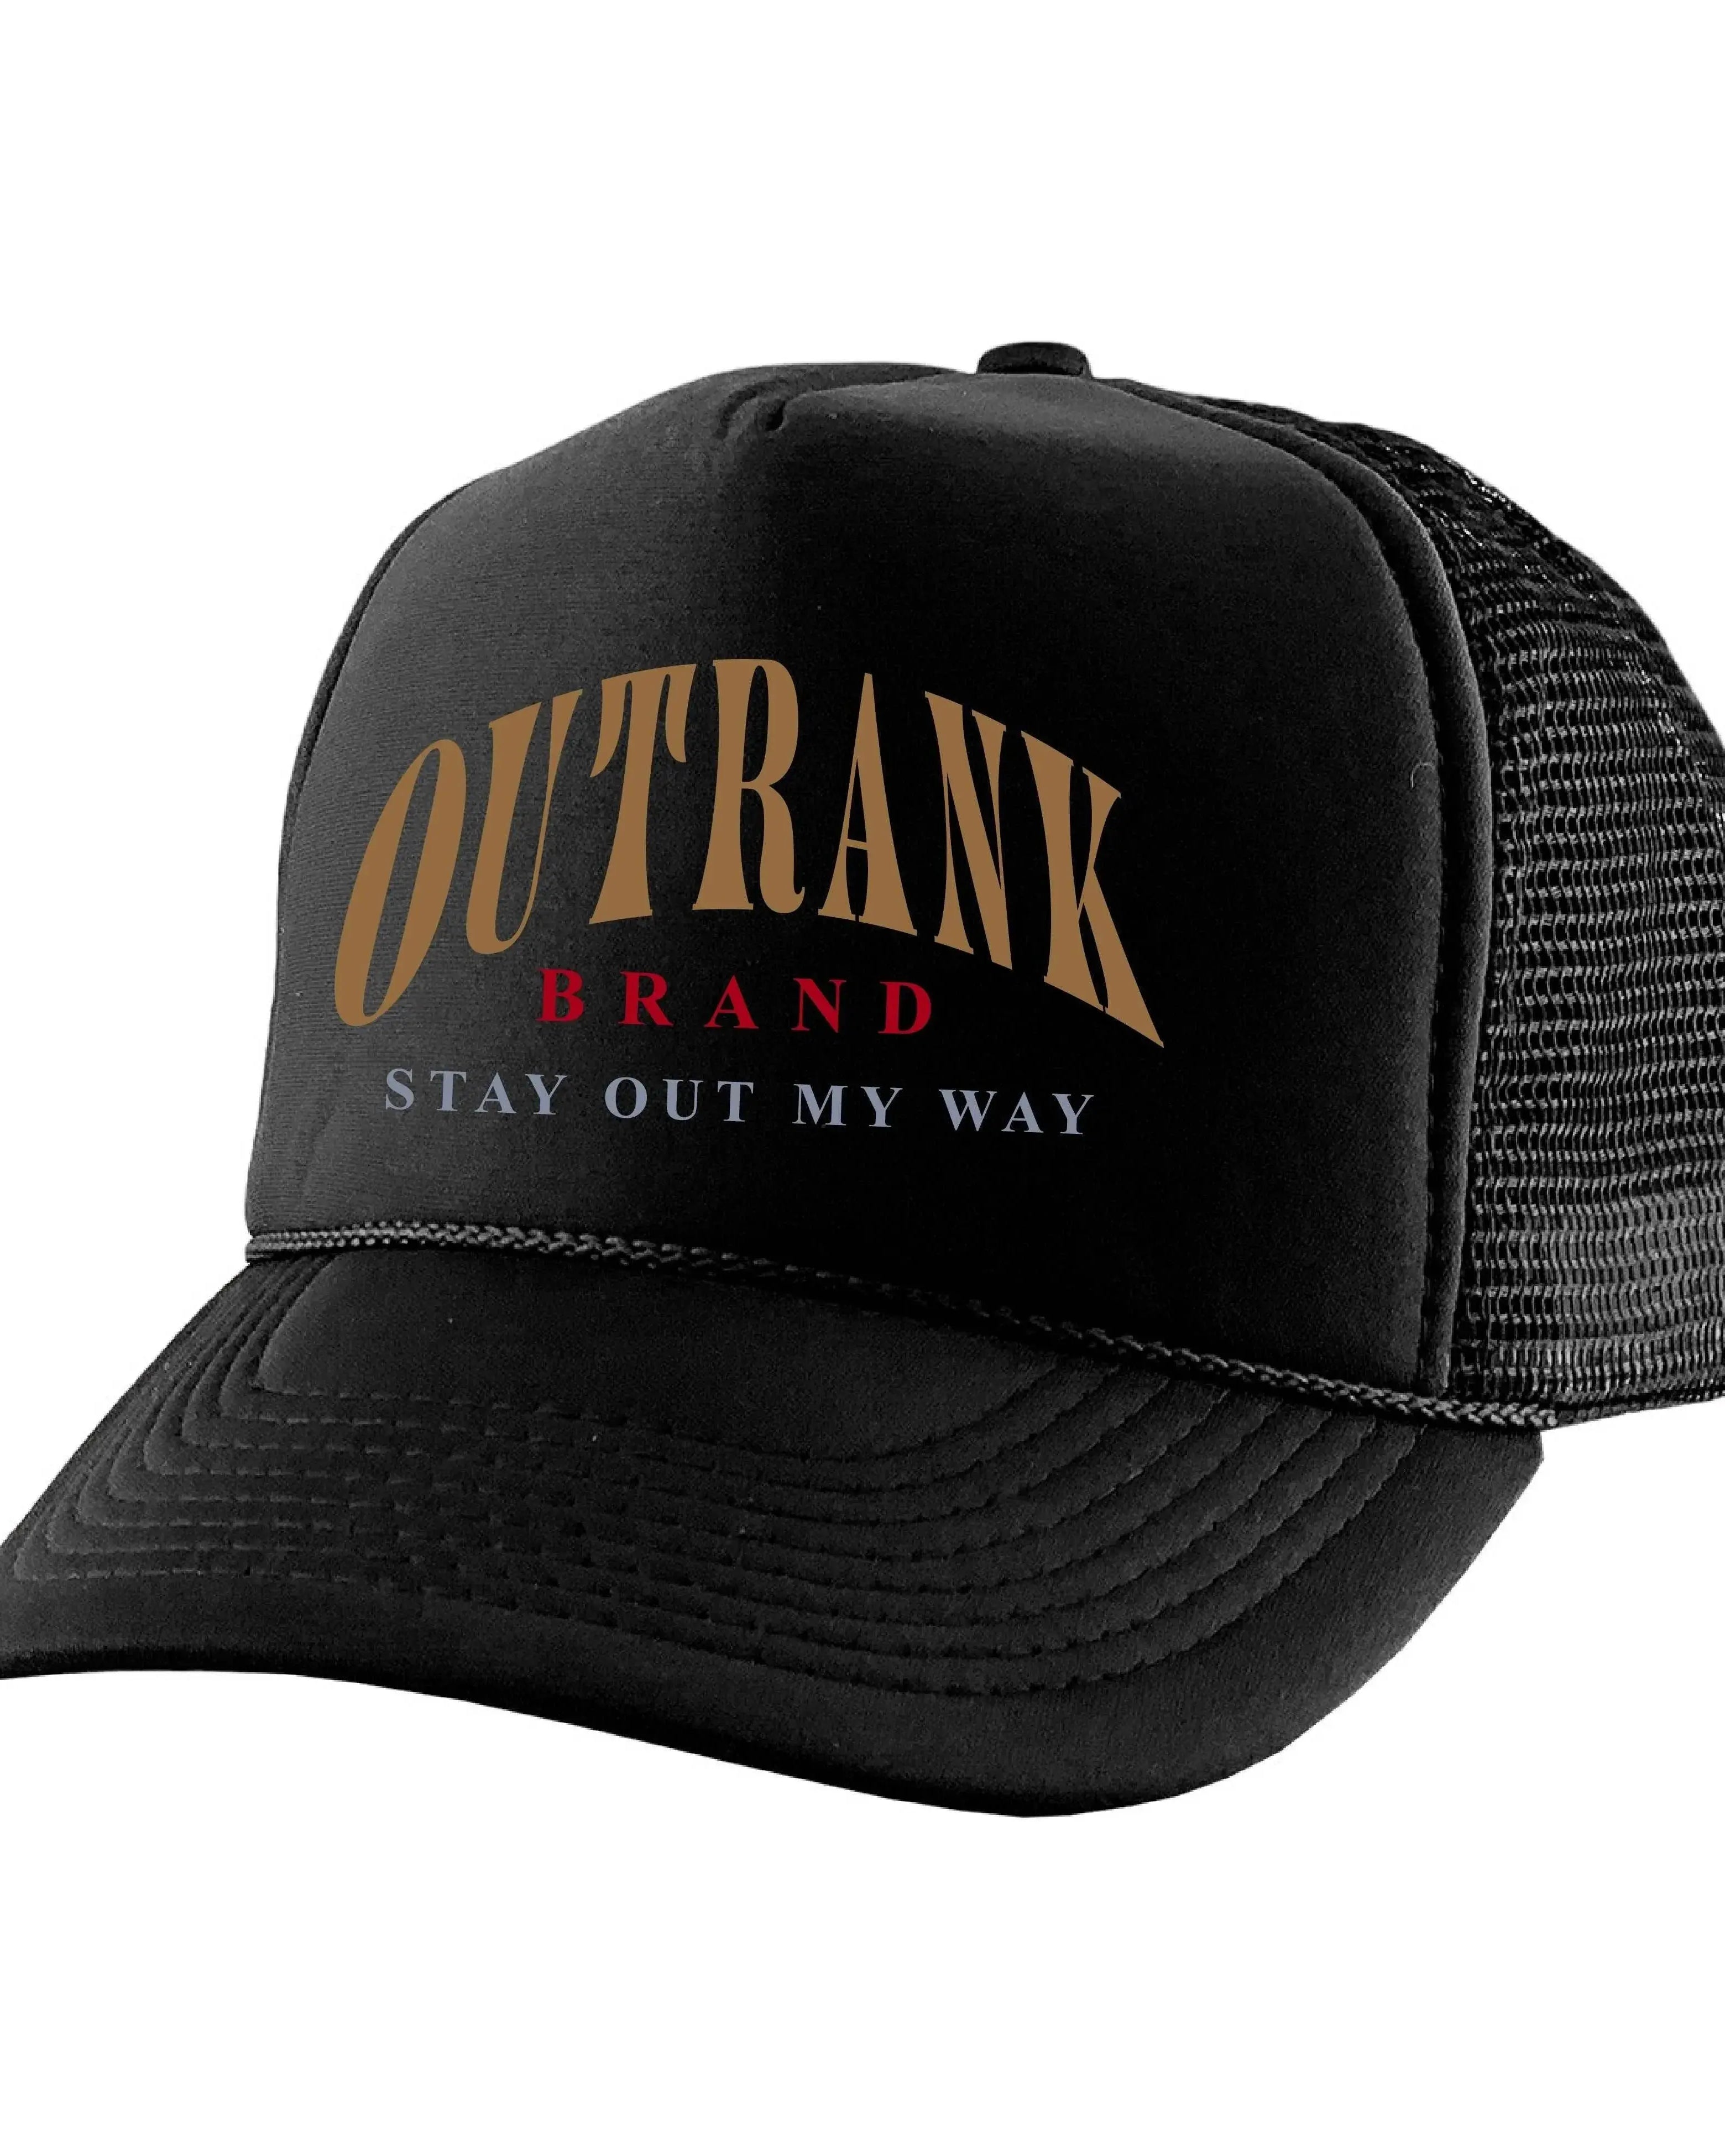 Out Of My Way Foam Trucker Hat - Outrank